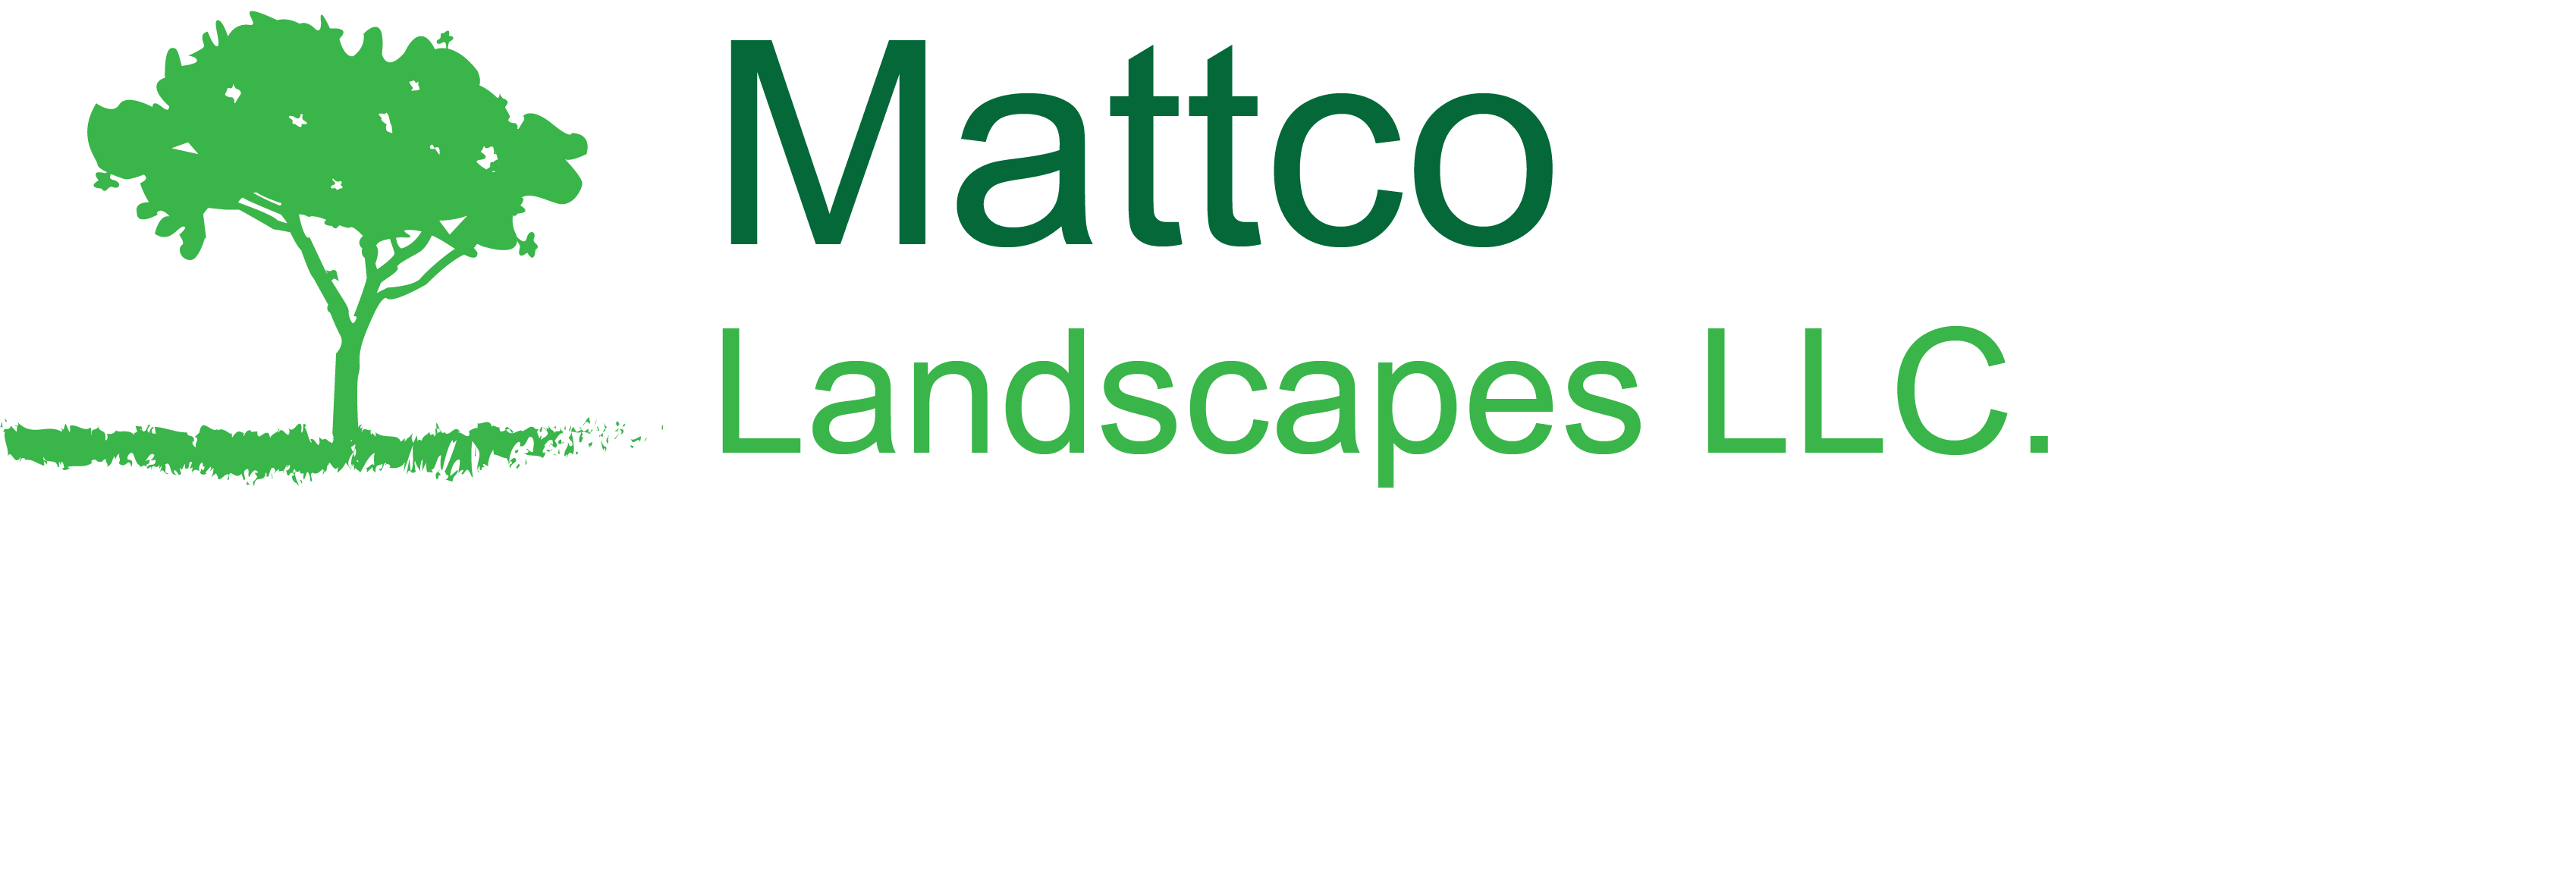 Mattco Landscaping LLC.